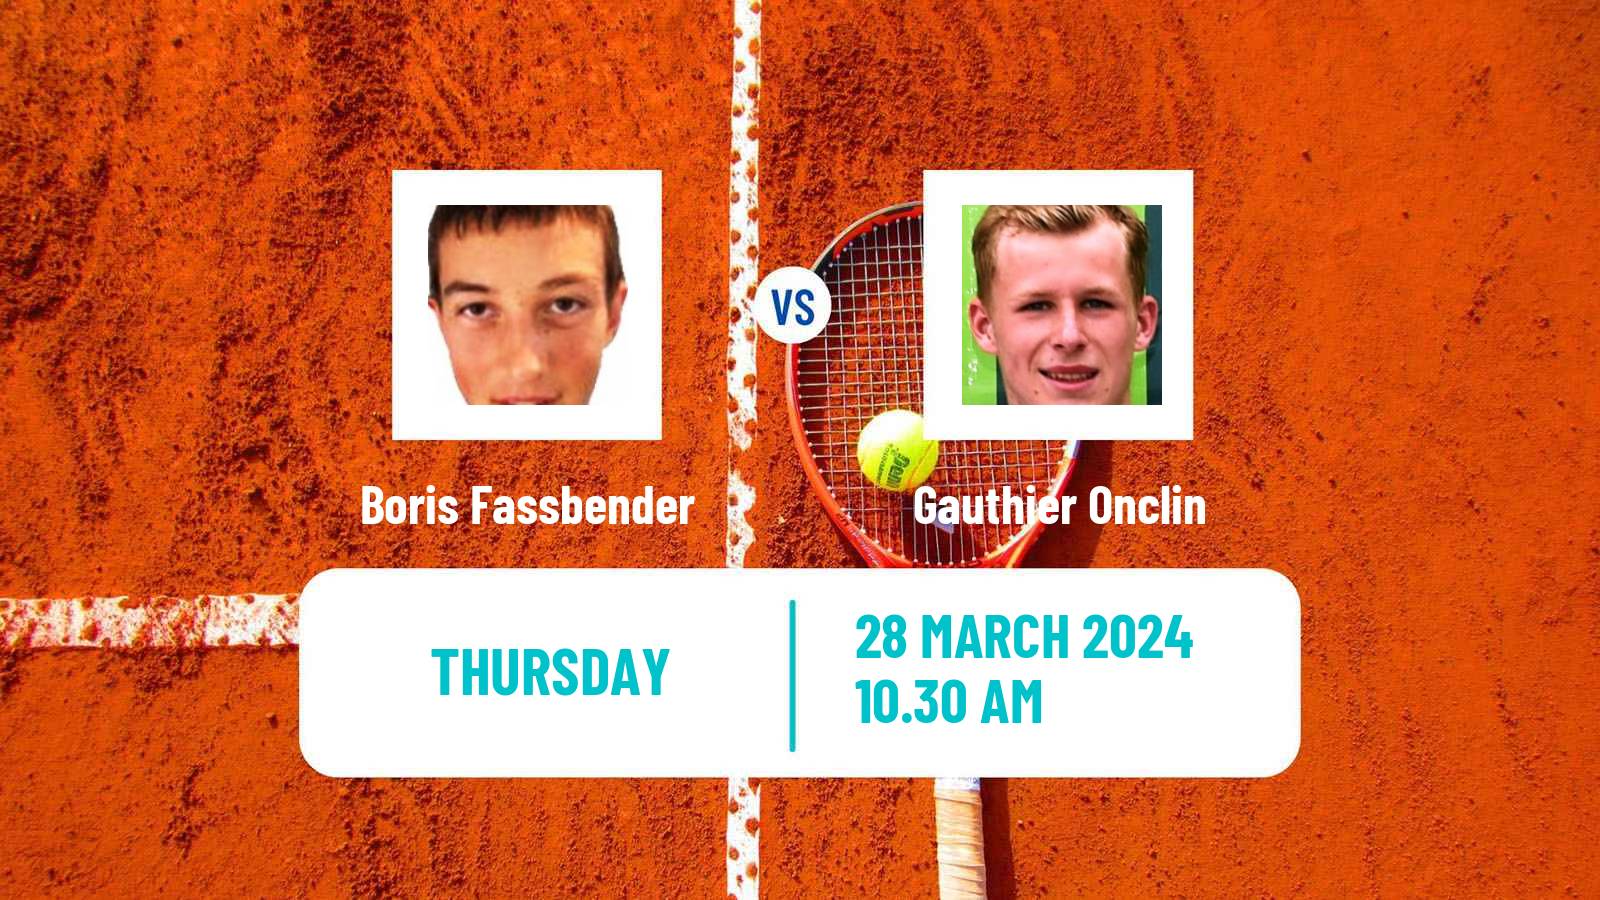 Tennis ITF M25 Saint Dizier Men Boris Fassbender - Gauthier Onclin